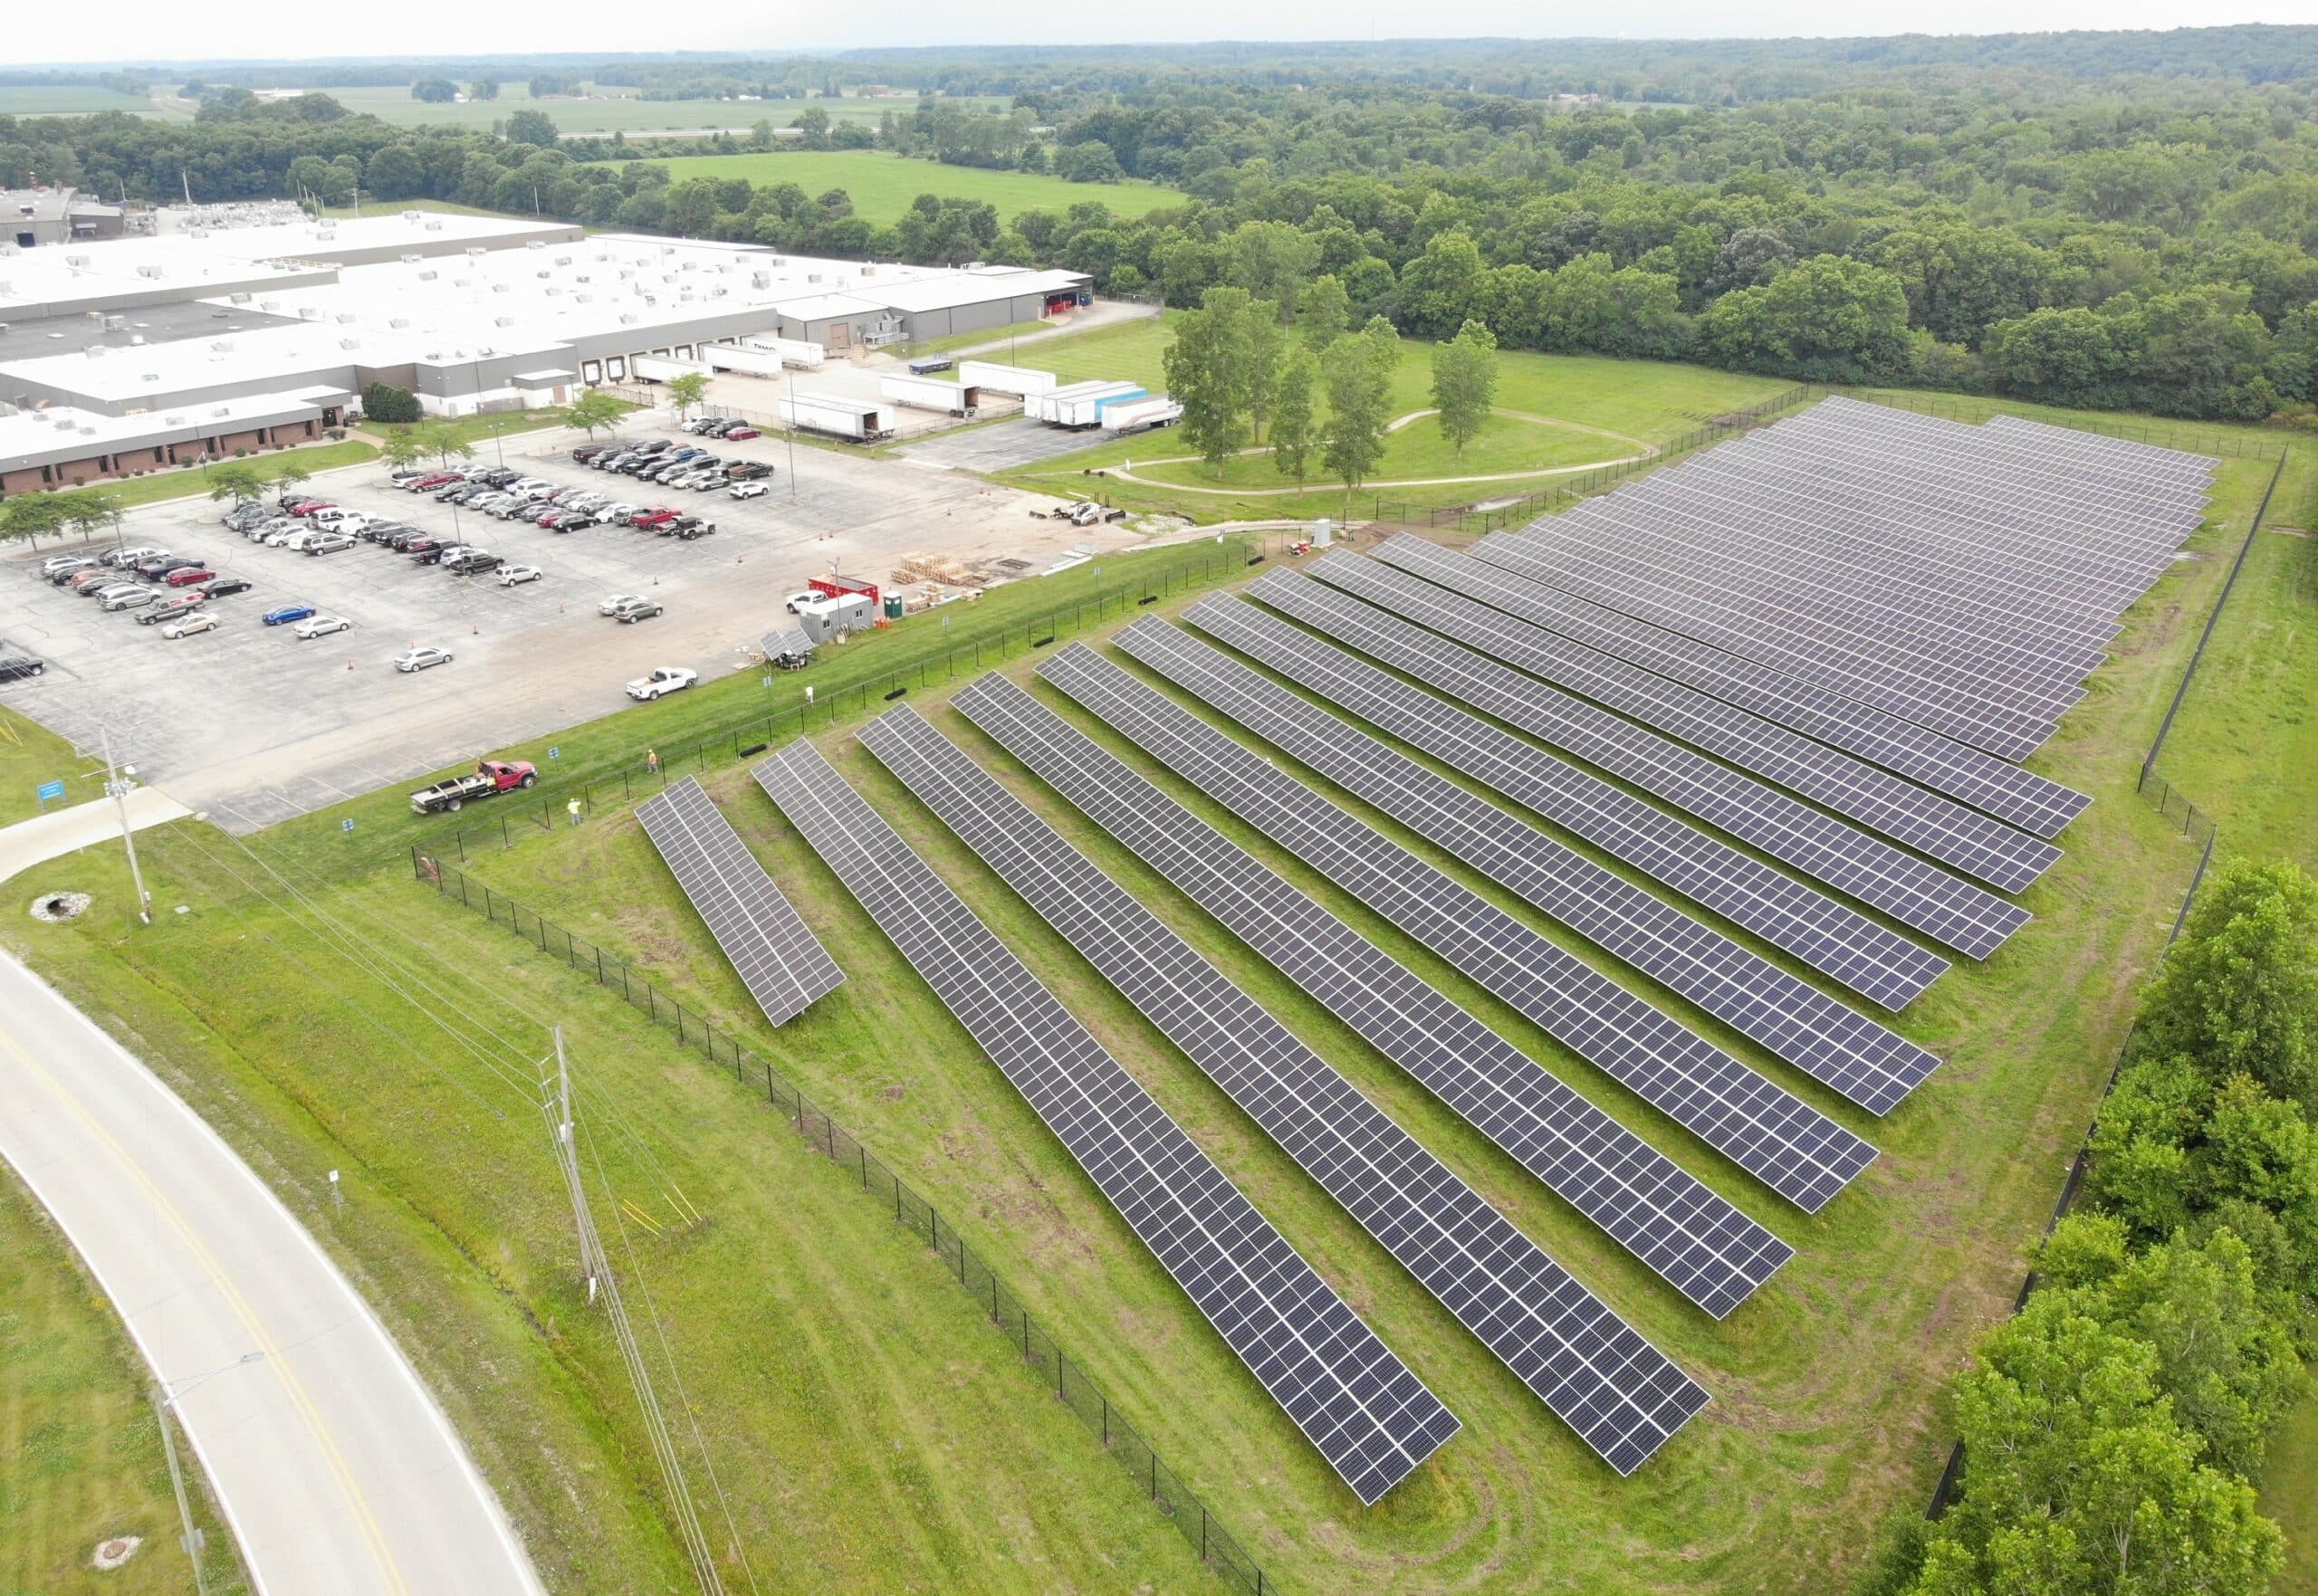 Bendix recently won an Indiana environmental award for its solar array